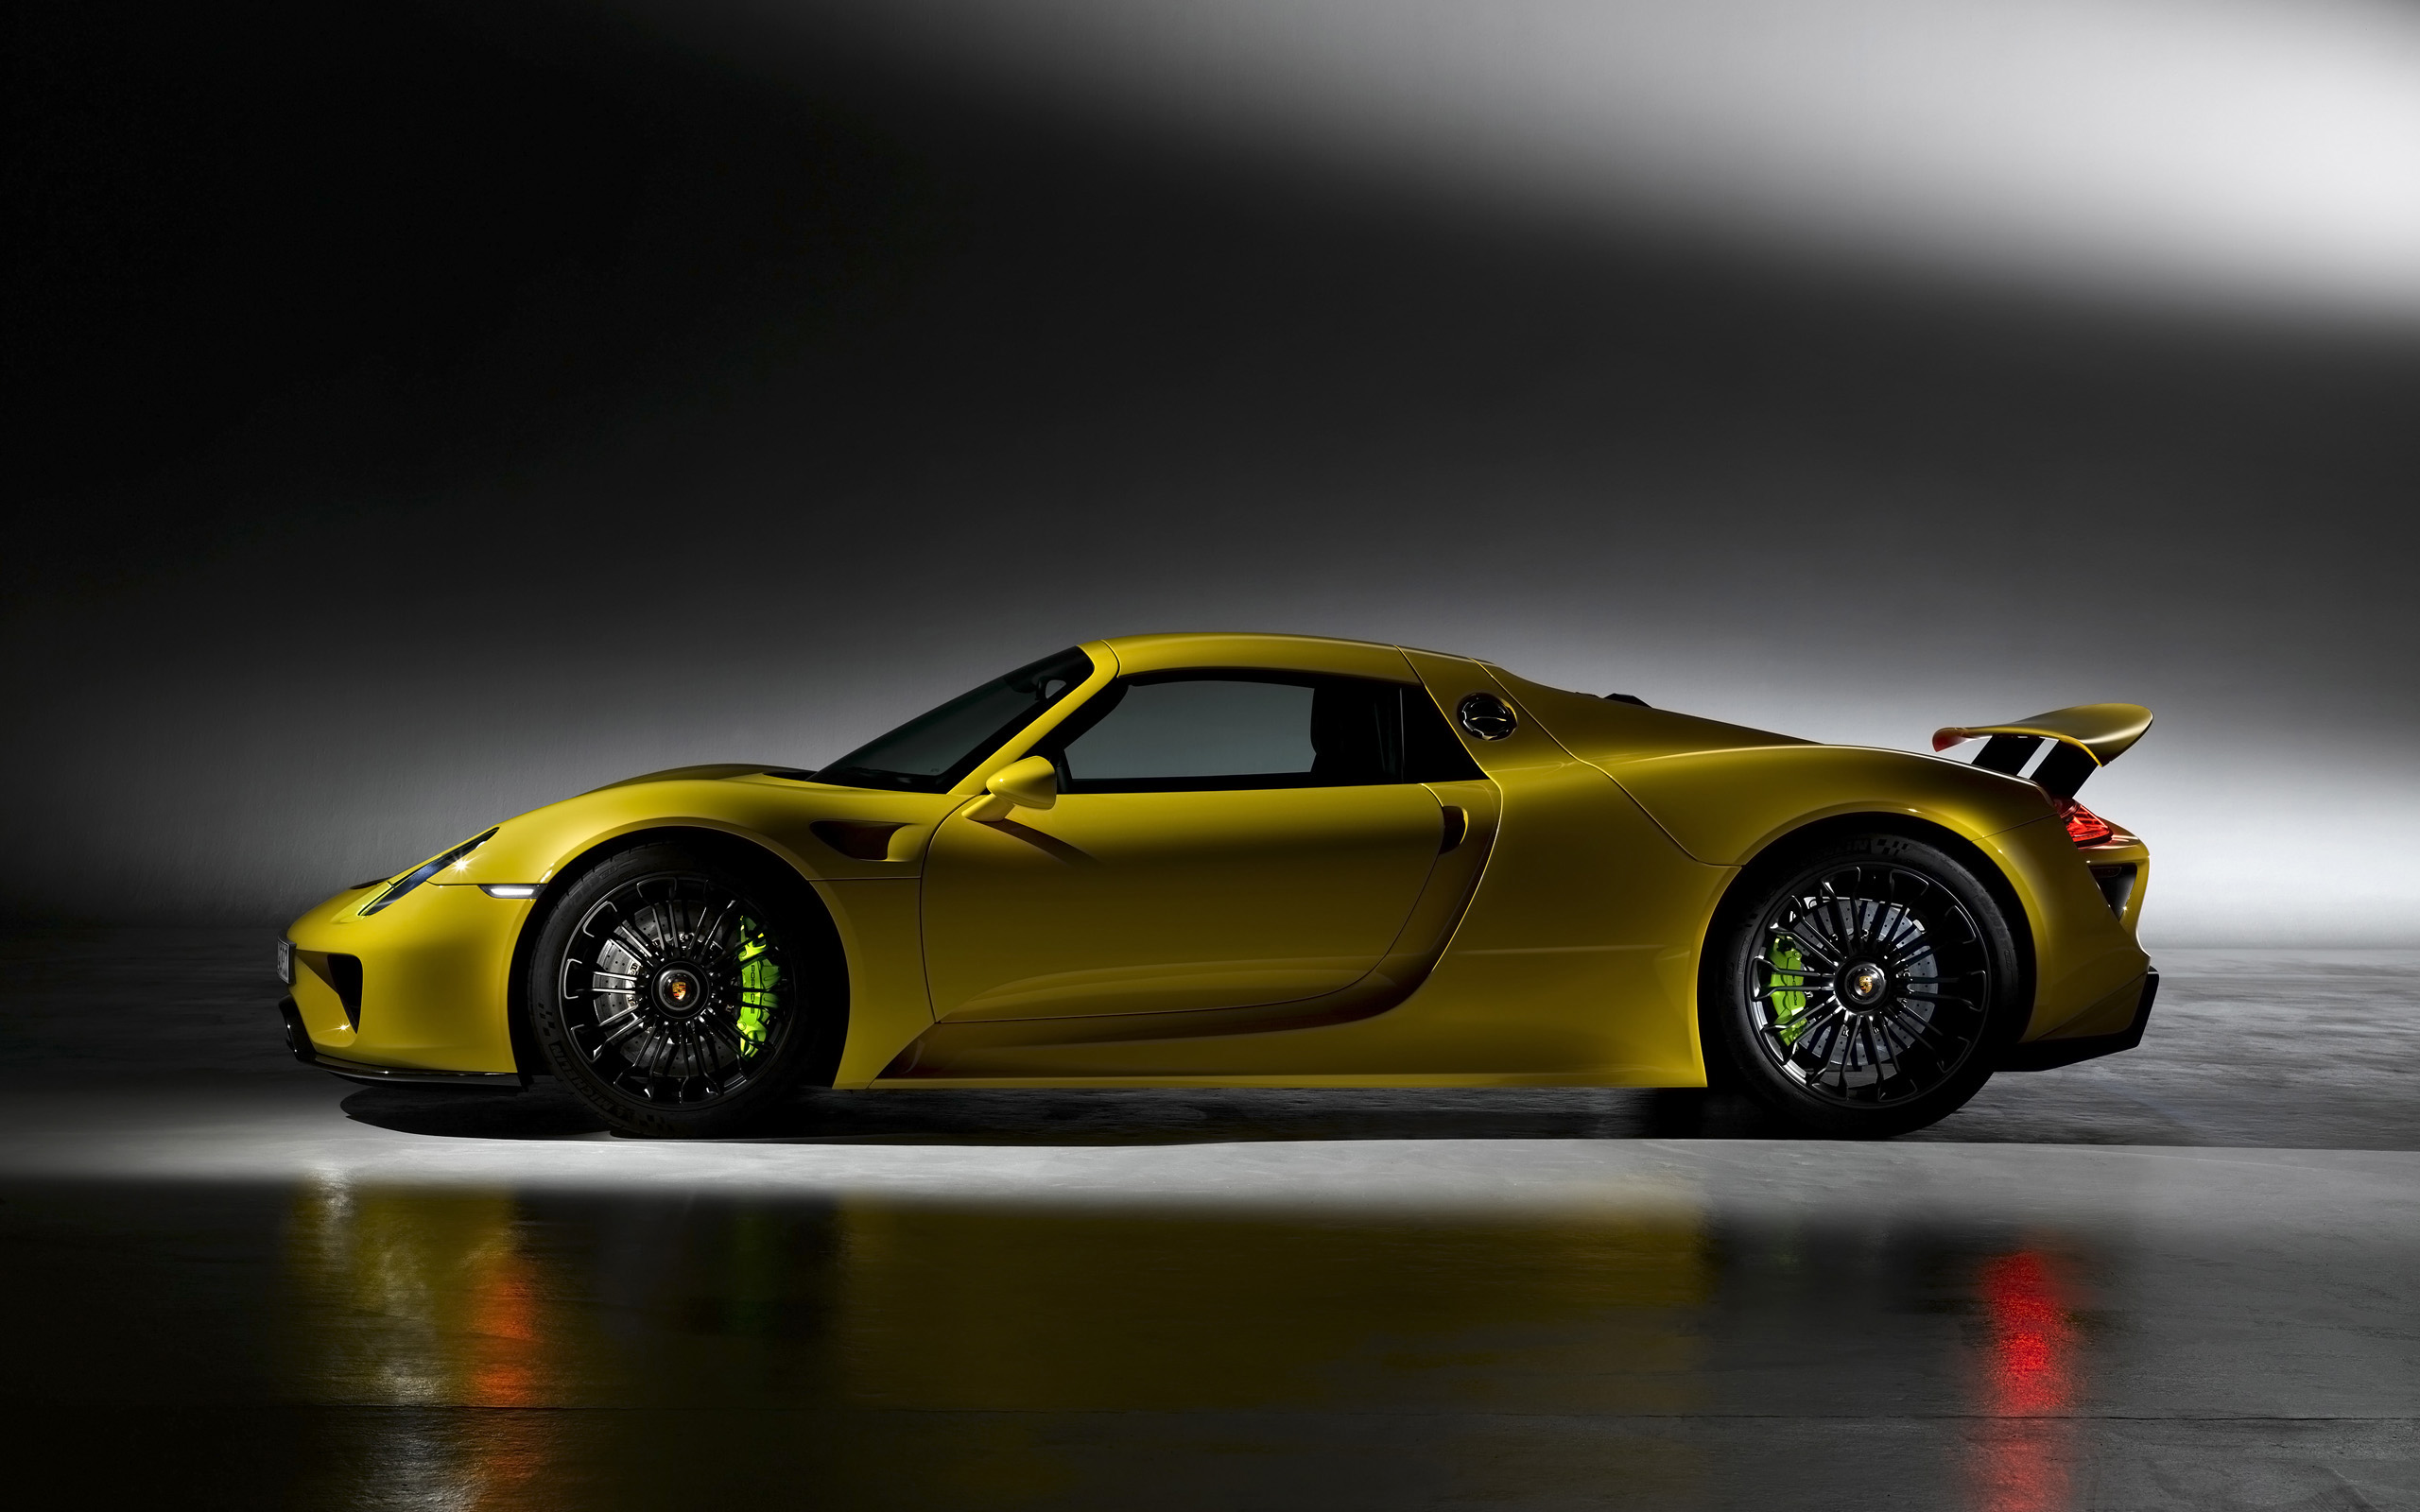 2014-Porsche-918-Spyder-Yellow-Static-2-2560x1600.jpg